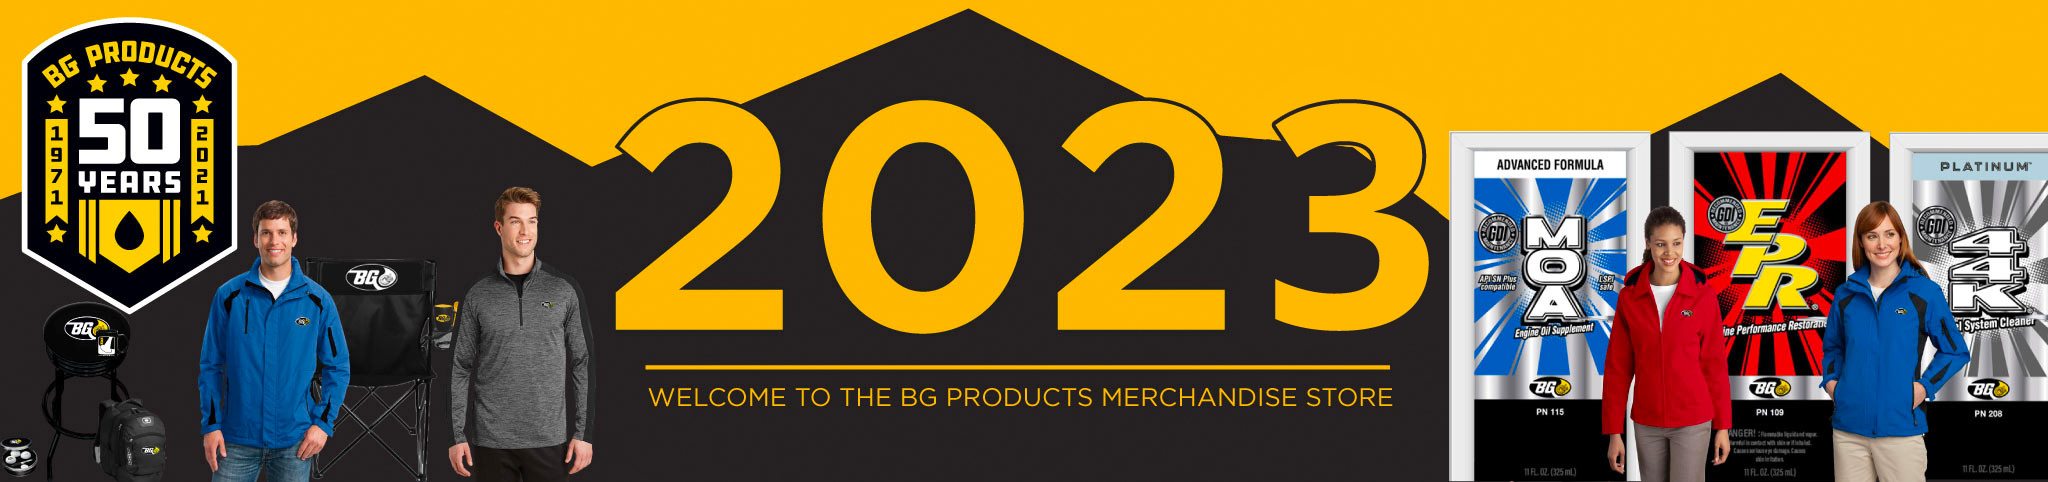 BG Products Gear Store 2022 Slider